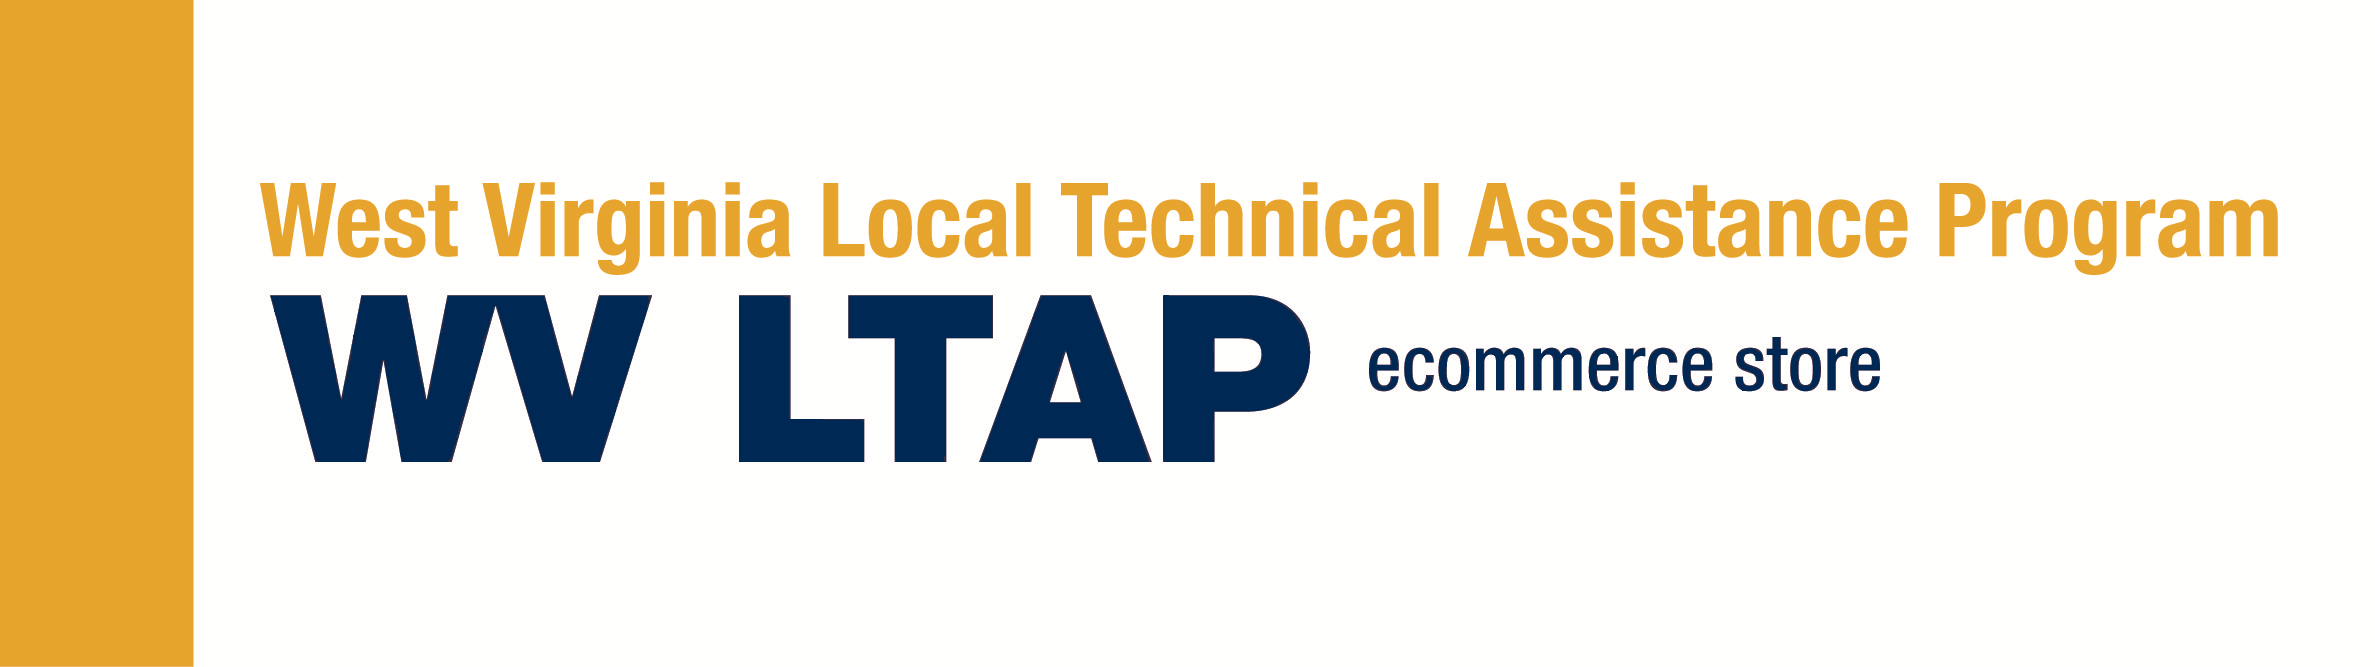 West Virginia Local Technical Assistance Program: WV LTAP eCommerce store